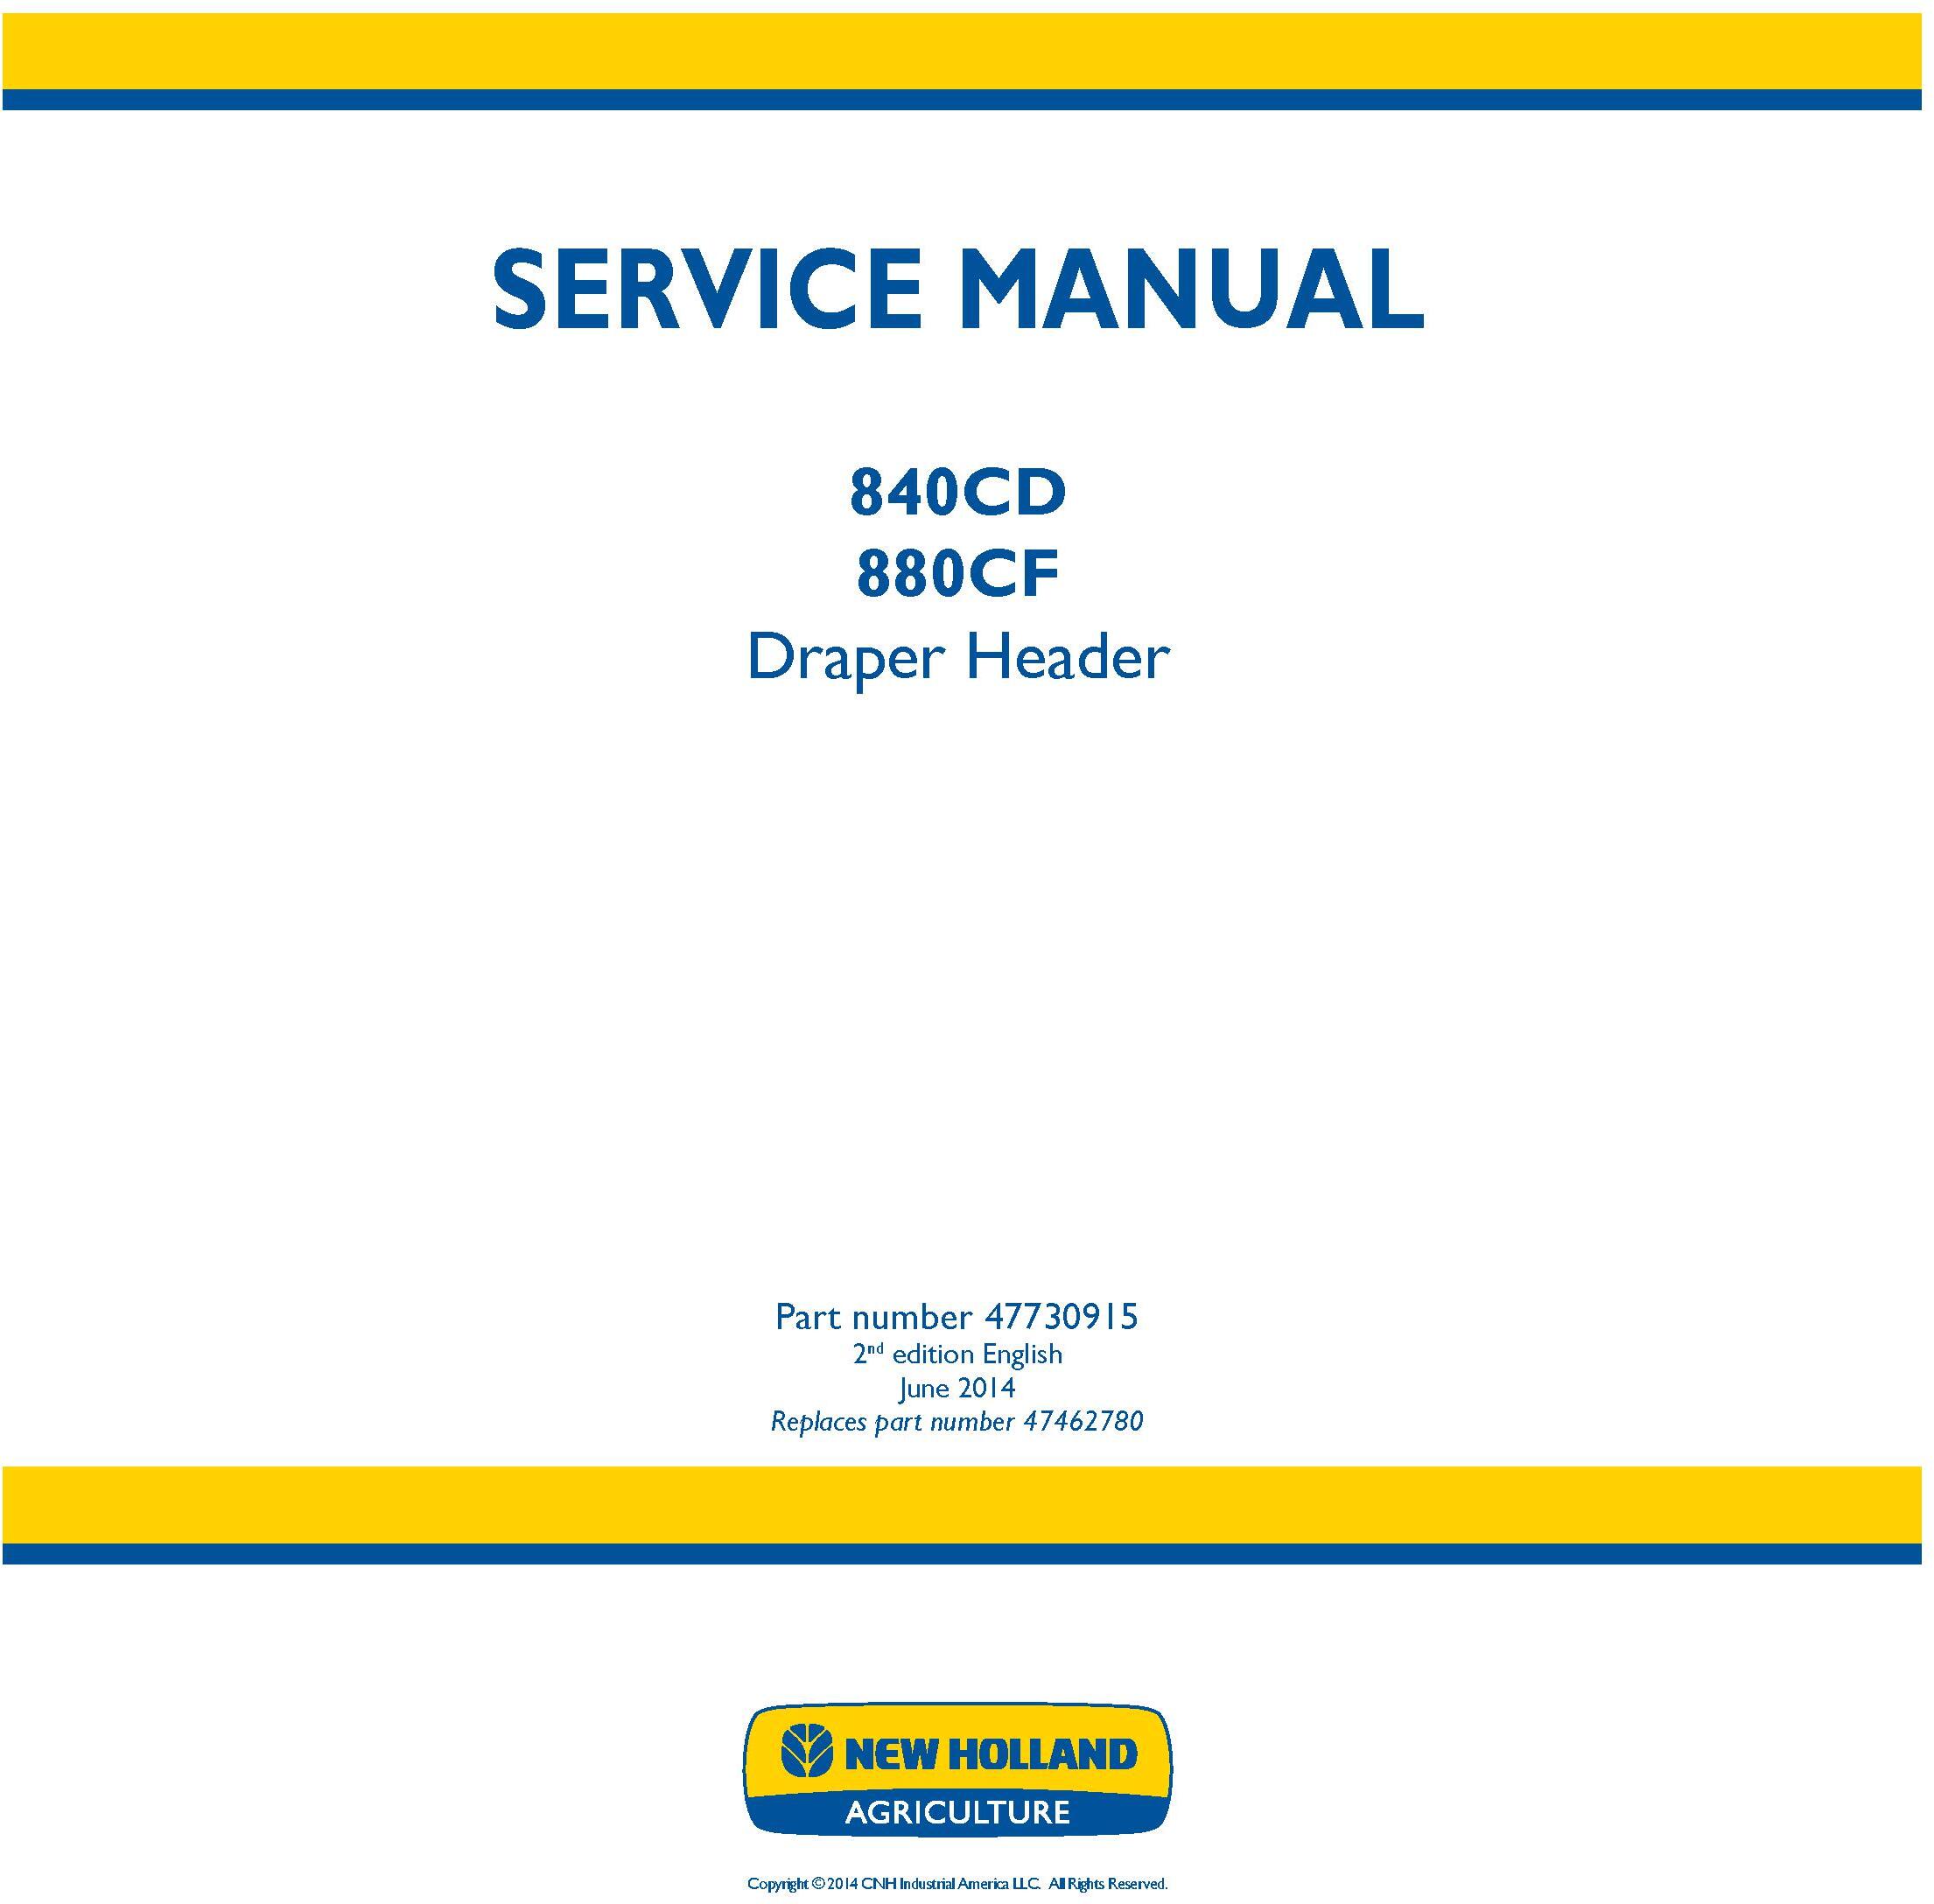 New Holland 840CD, 880CF Draper Header Service Manual